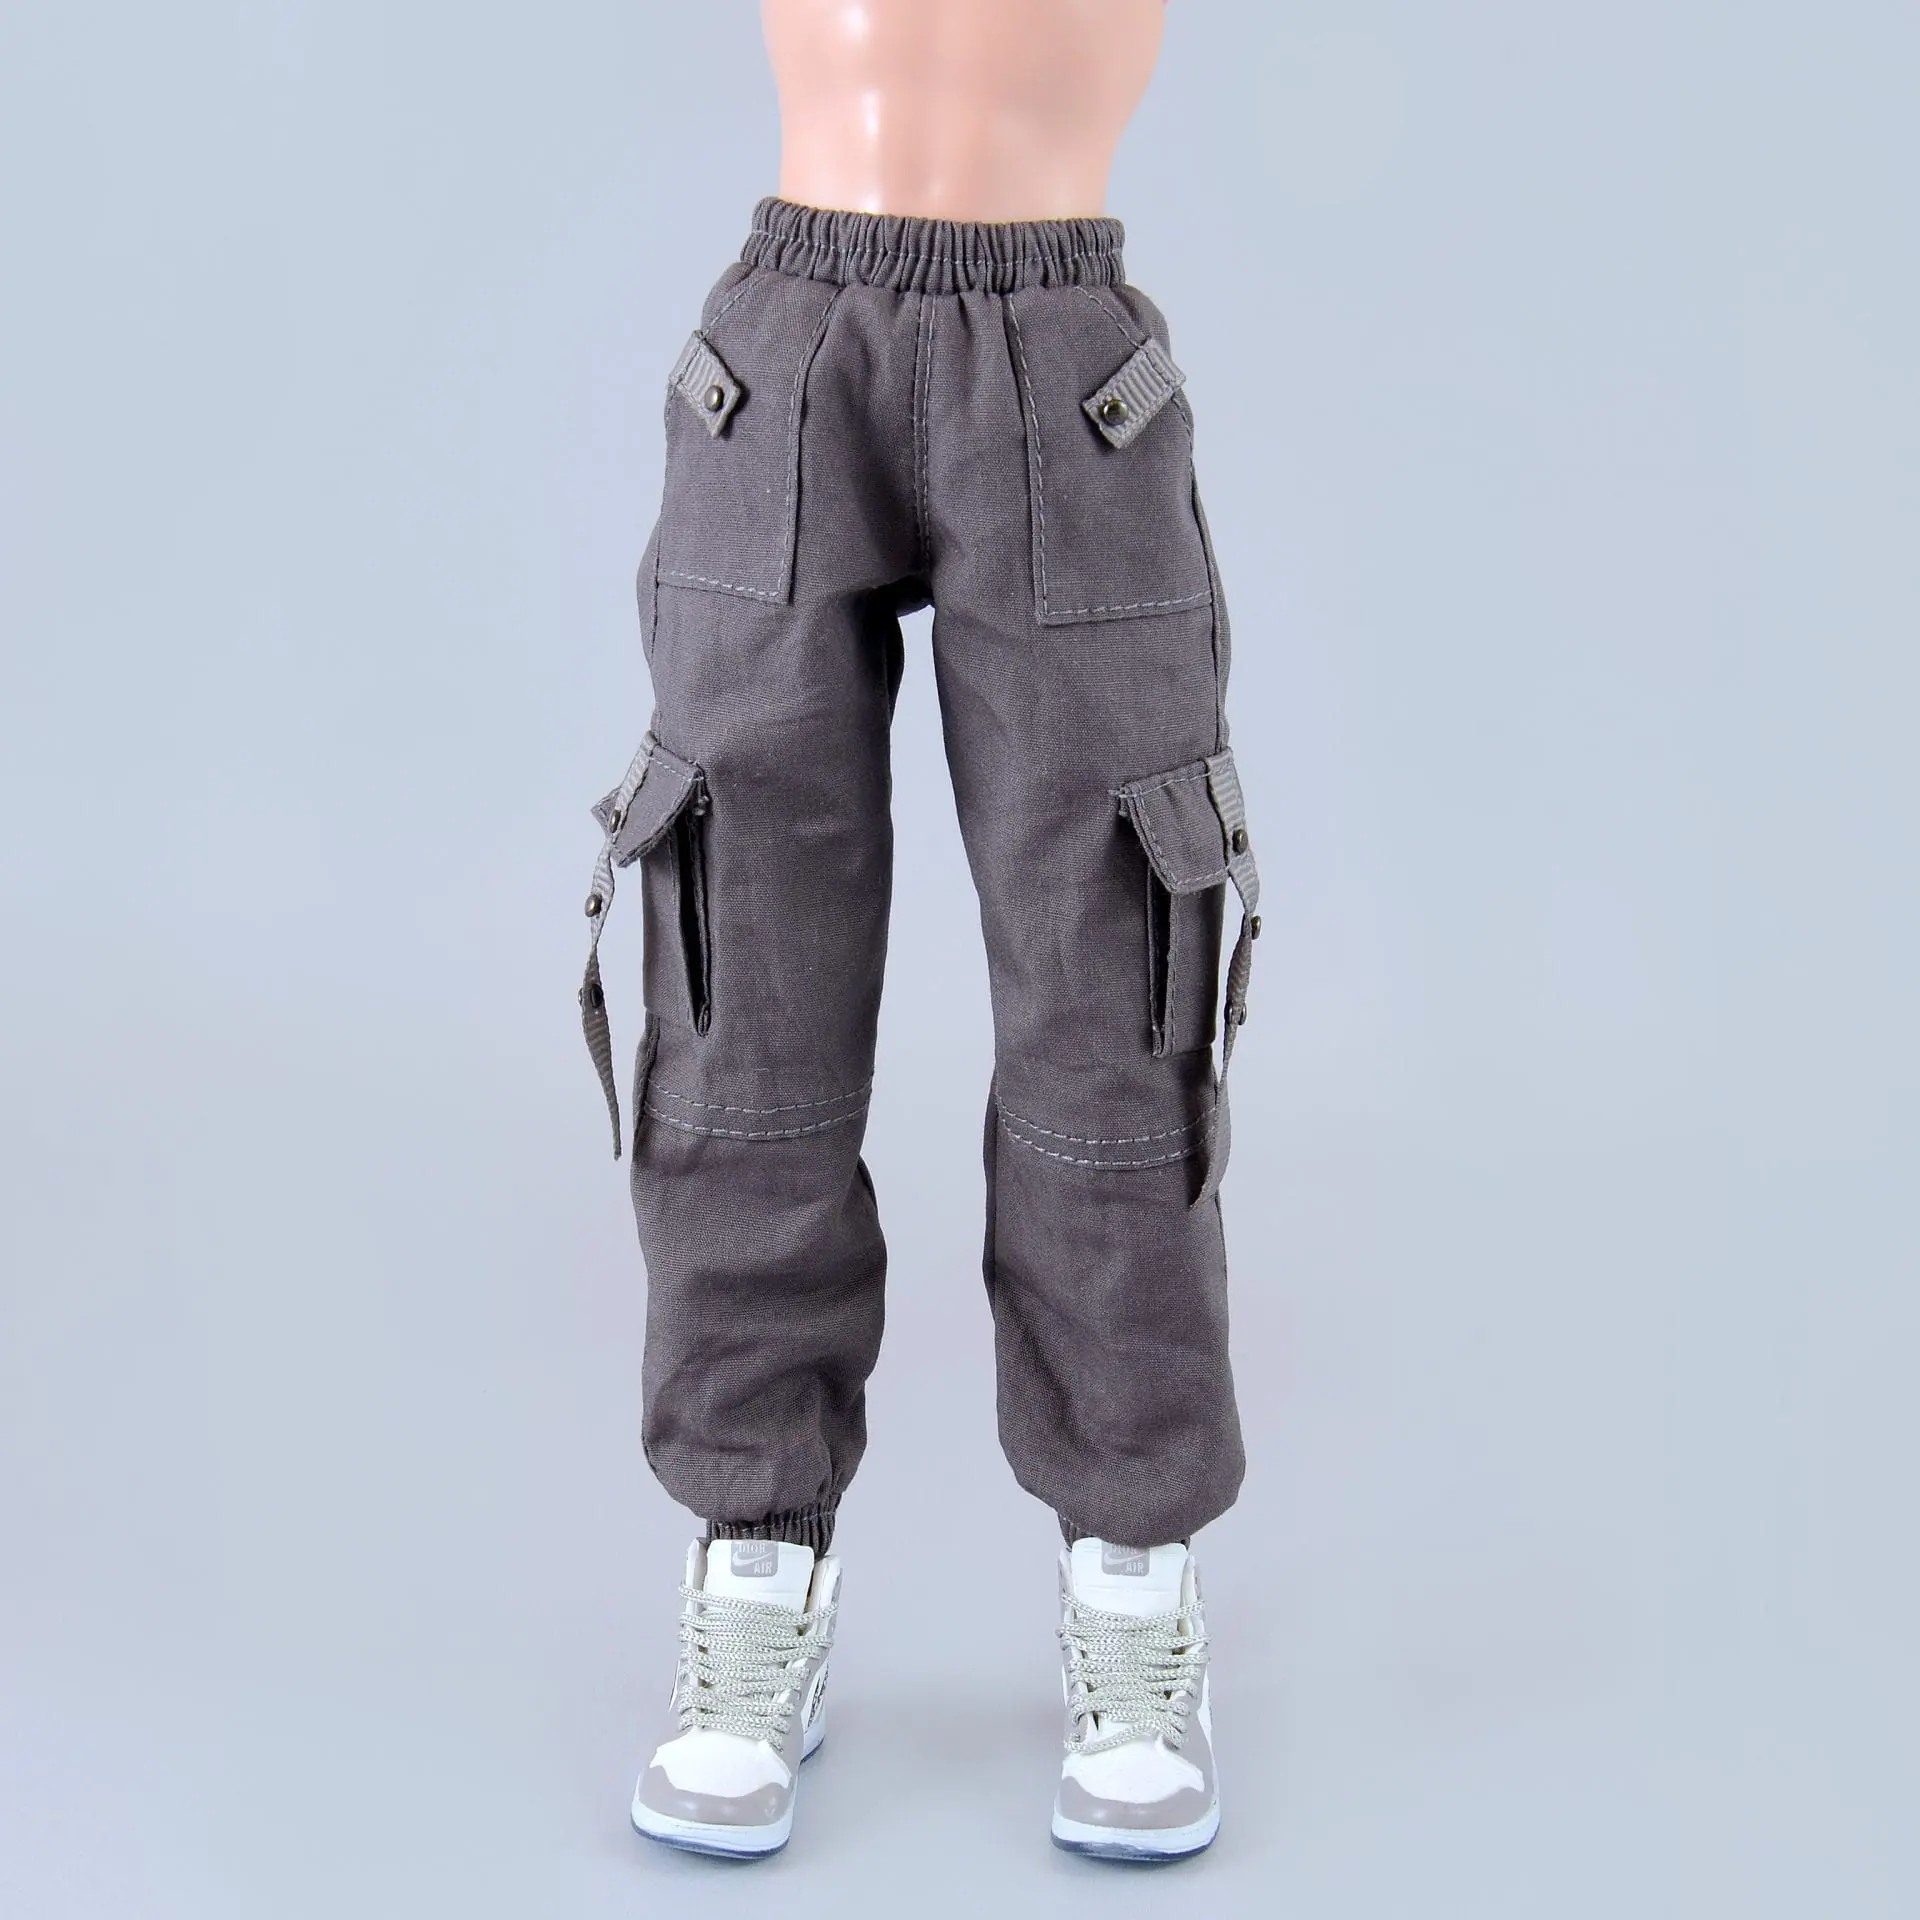 Cotton Cargo Pants - Design #11, MakeYourOwnJeans®